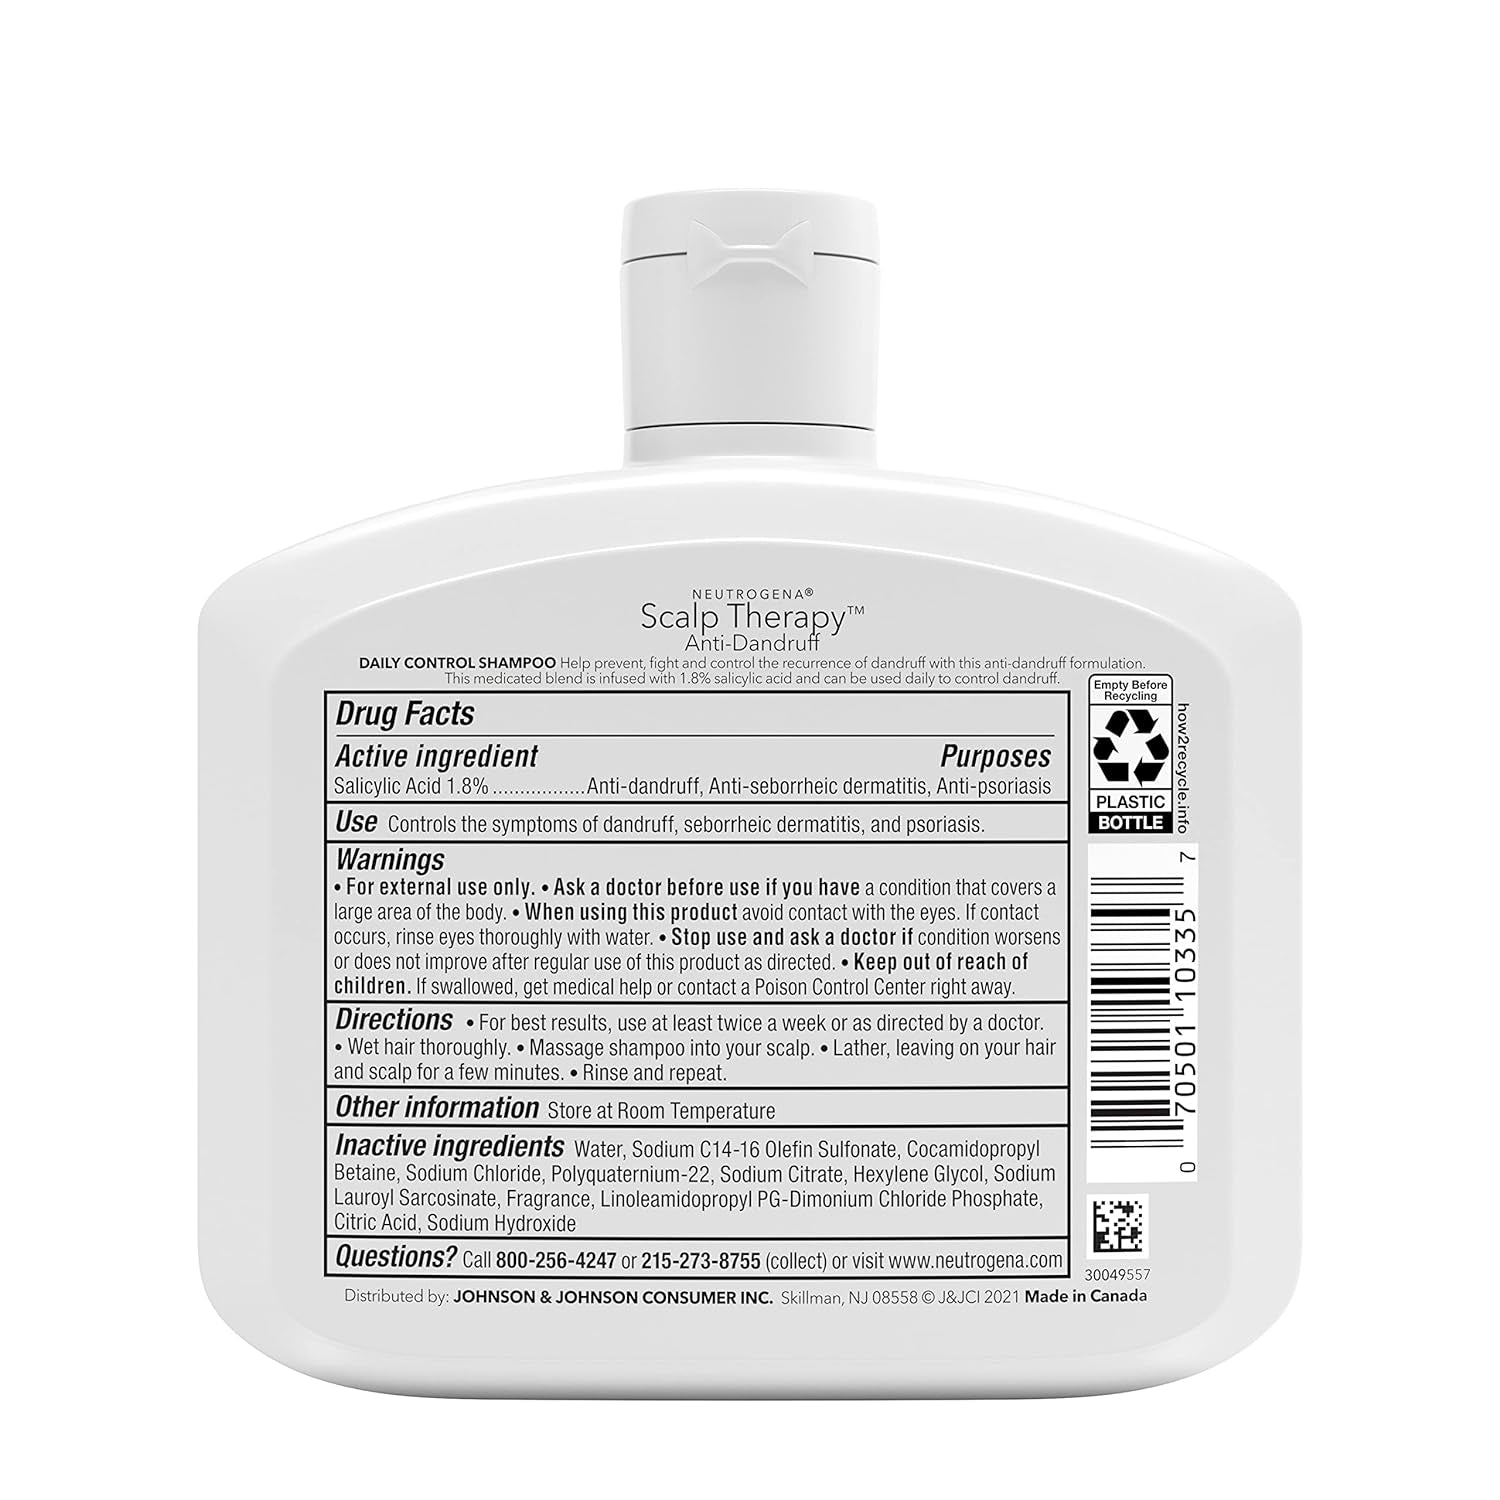 Neutrogena Scalp Therapy Anti-Dandruff Shampoo Daily Control, 1.8% Salicylic Acid, with Fragrance of Warm Vanilla & Toasted Coconut Notes, 12 Fl Oz